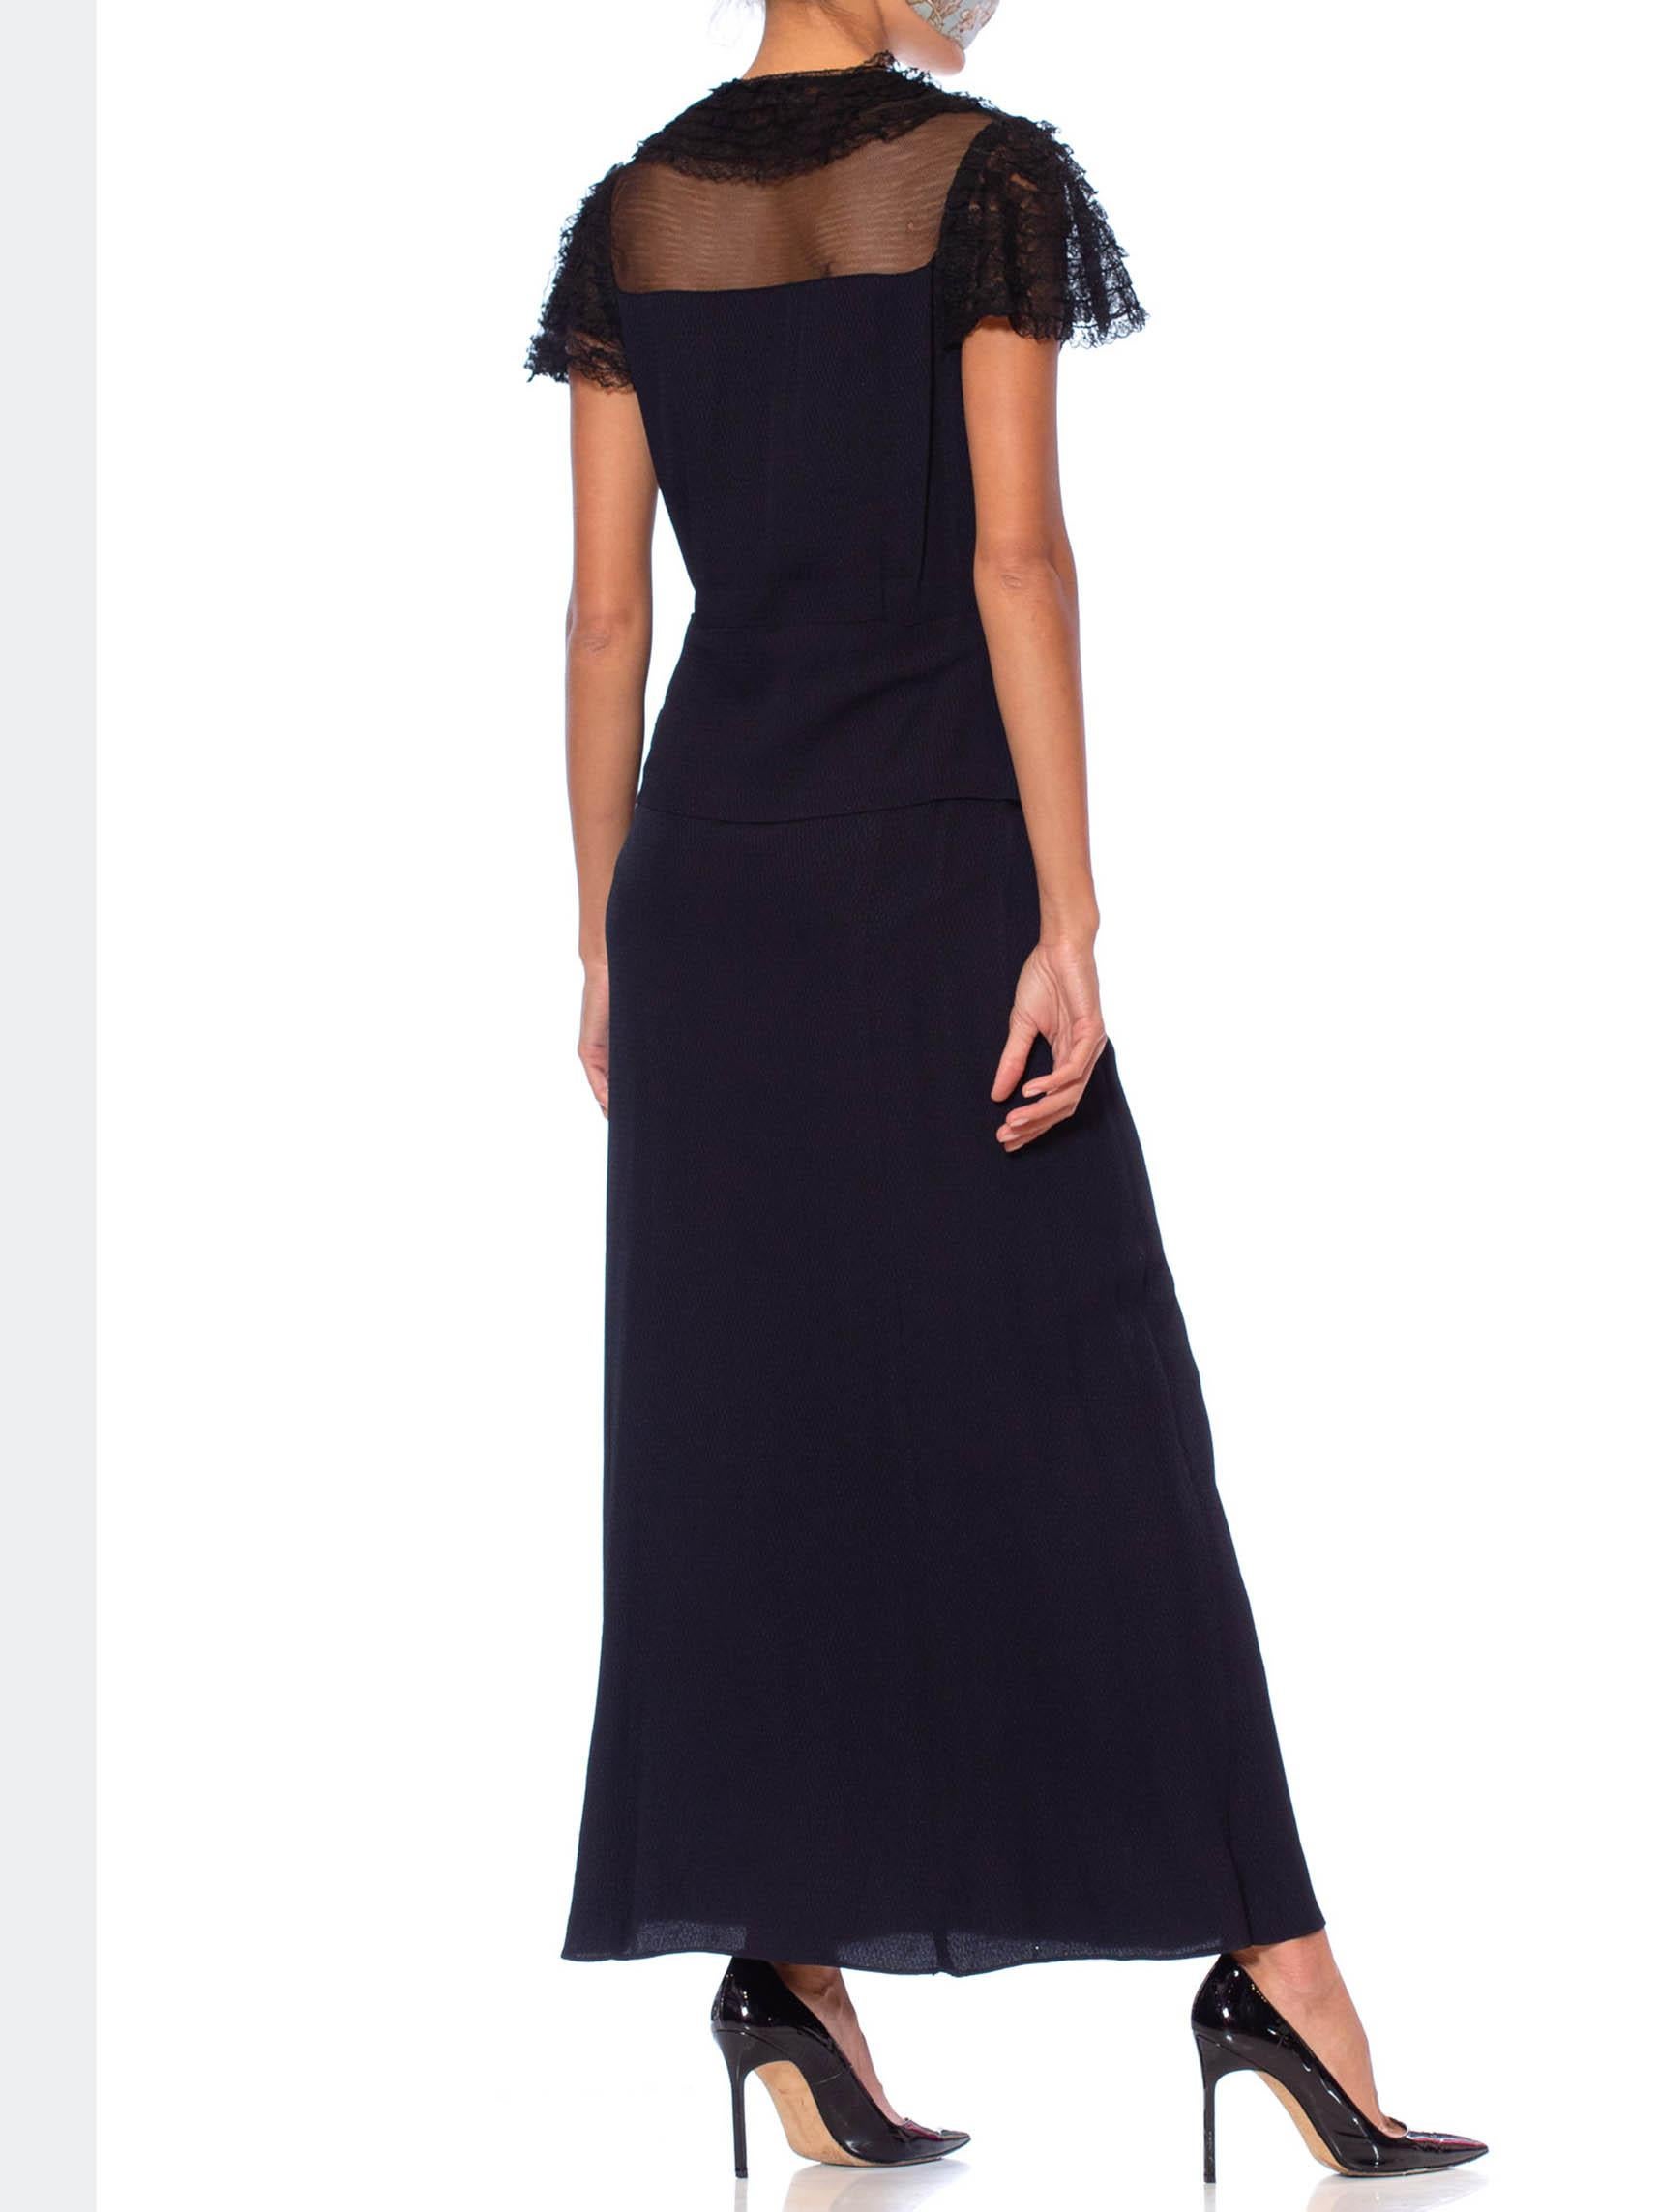 1930S Black Silk Crepe Jacquard Dress With Sheer Net Yoke & Lace Ruffle Sleeves For Sale 4